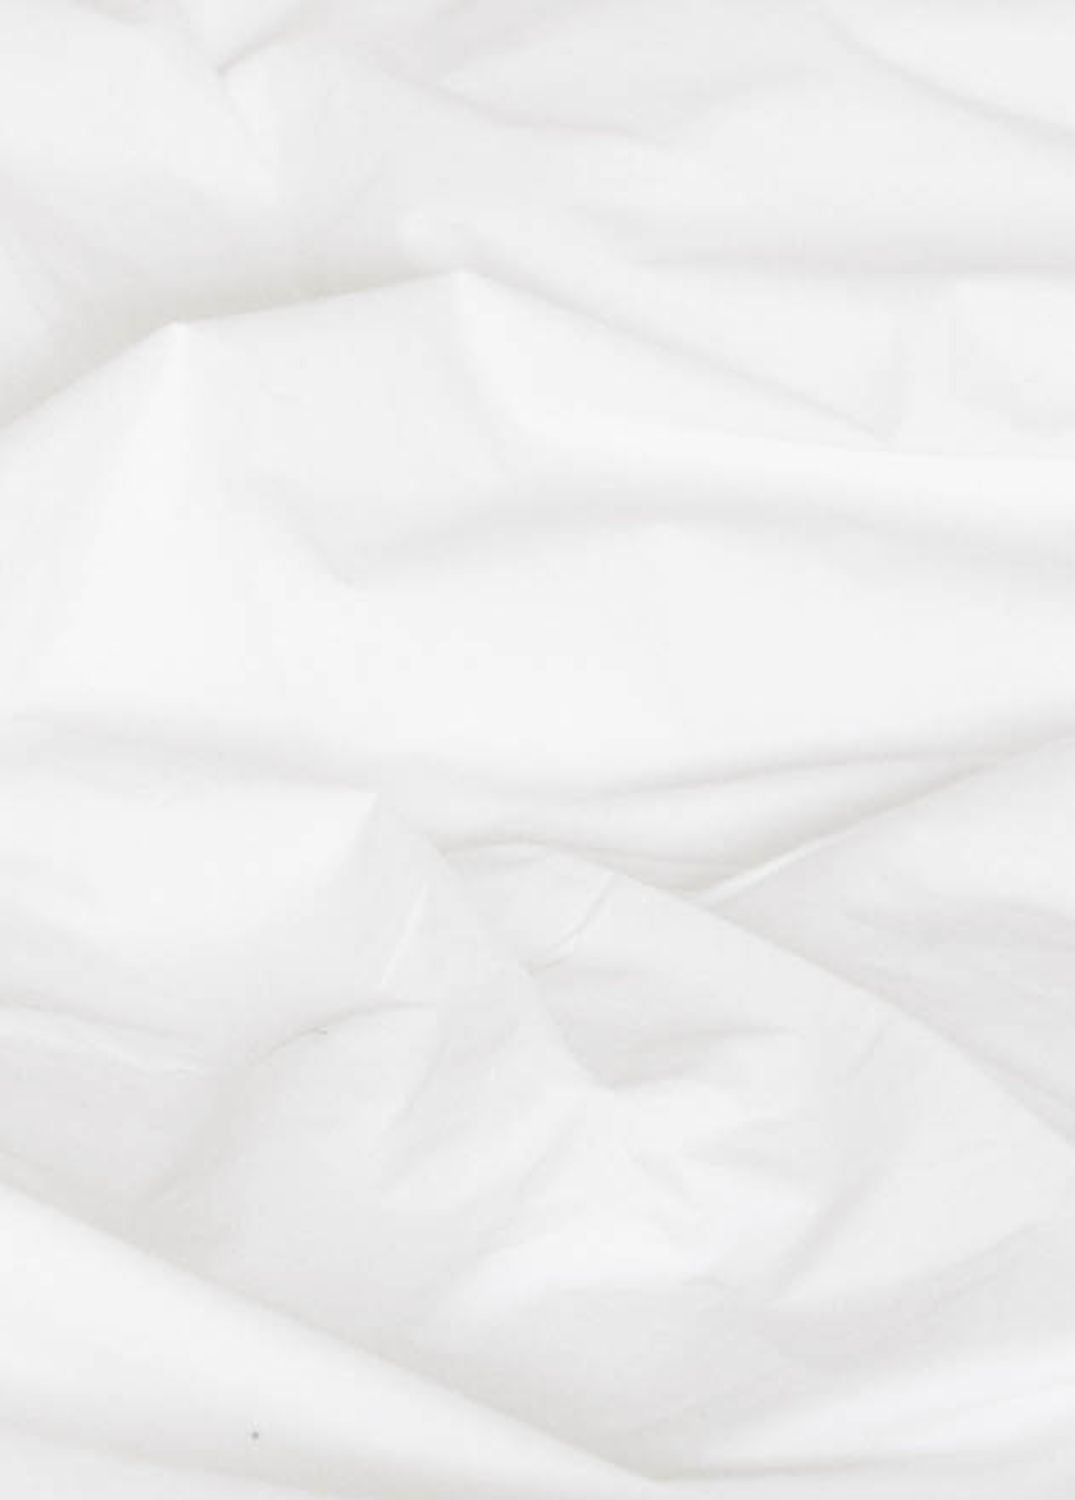 Sekan Studio Cotton Percale Bed Set - White